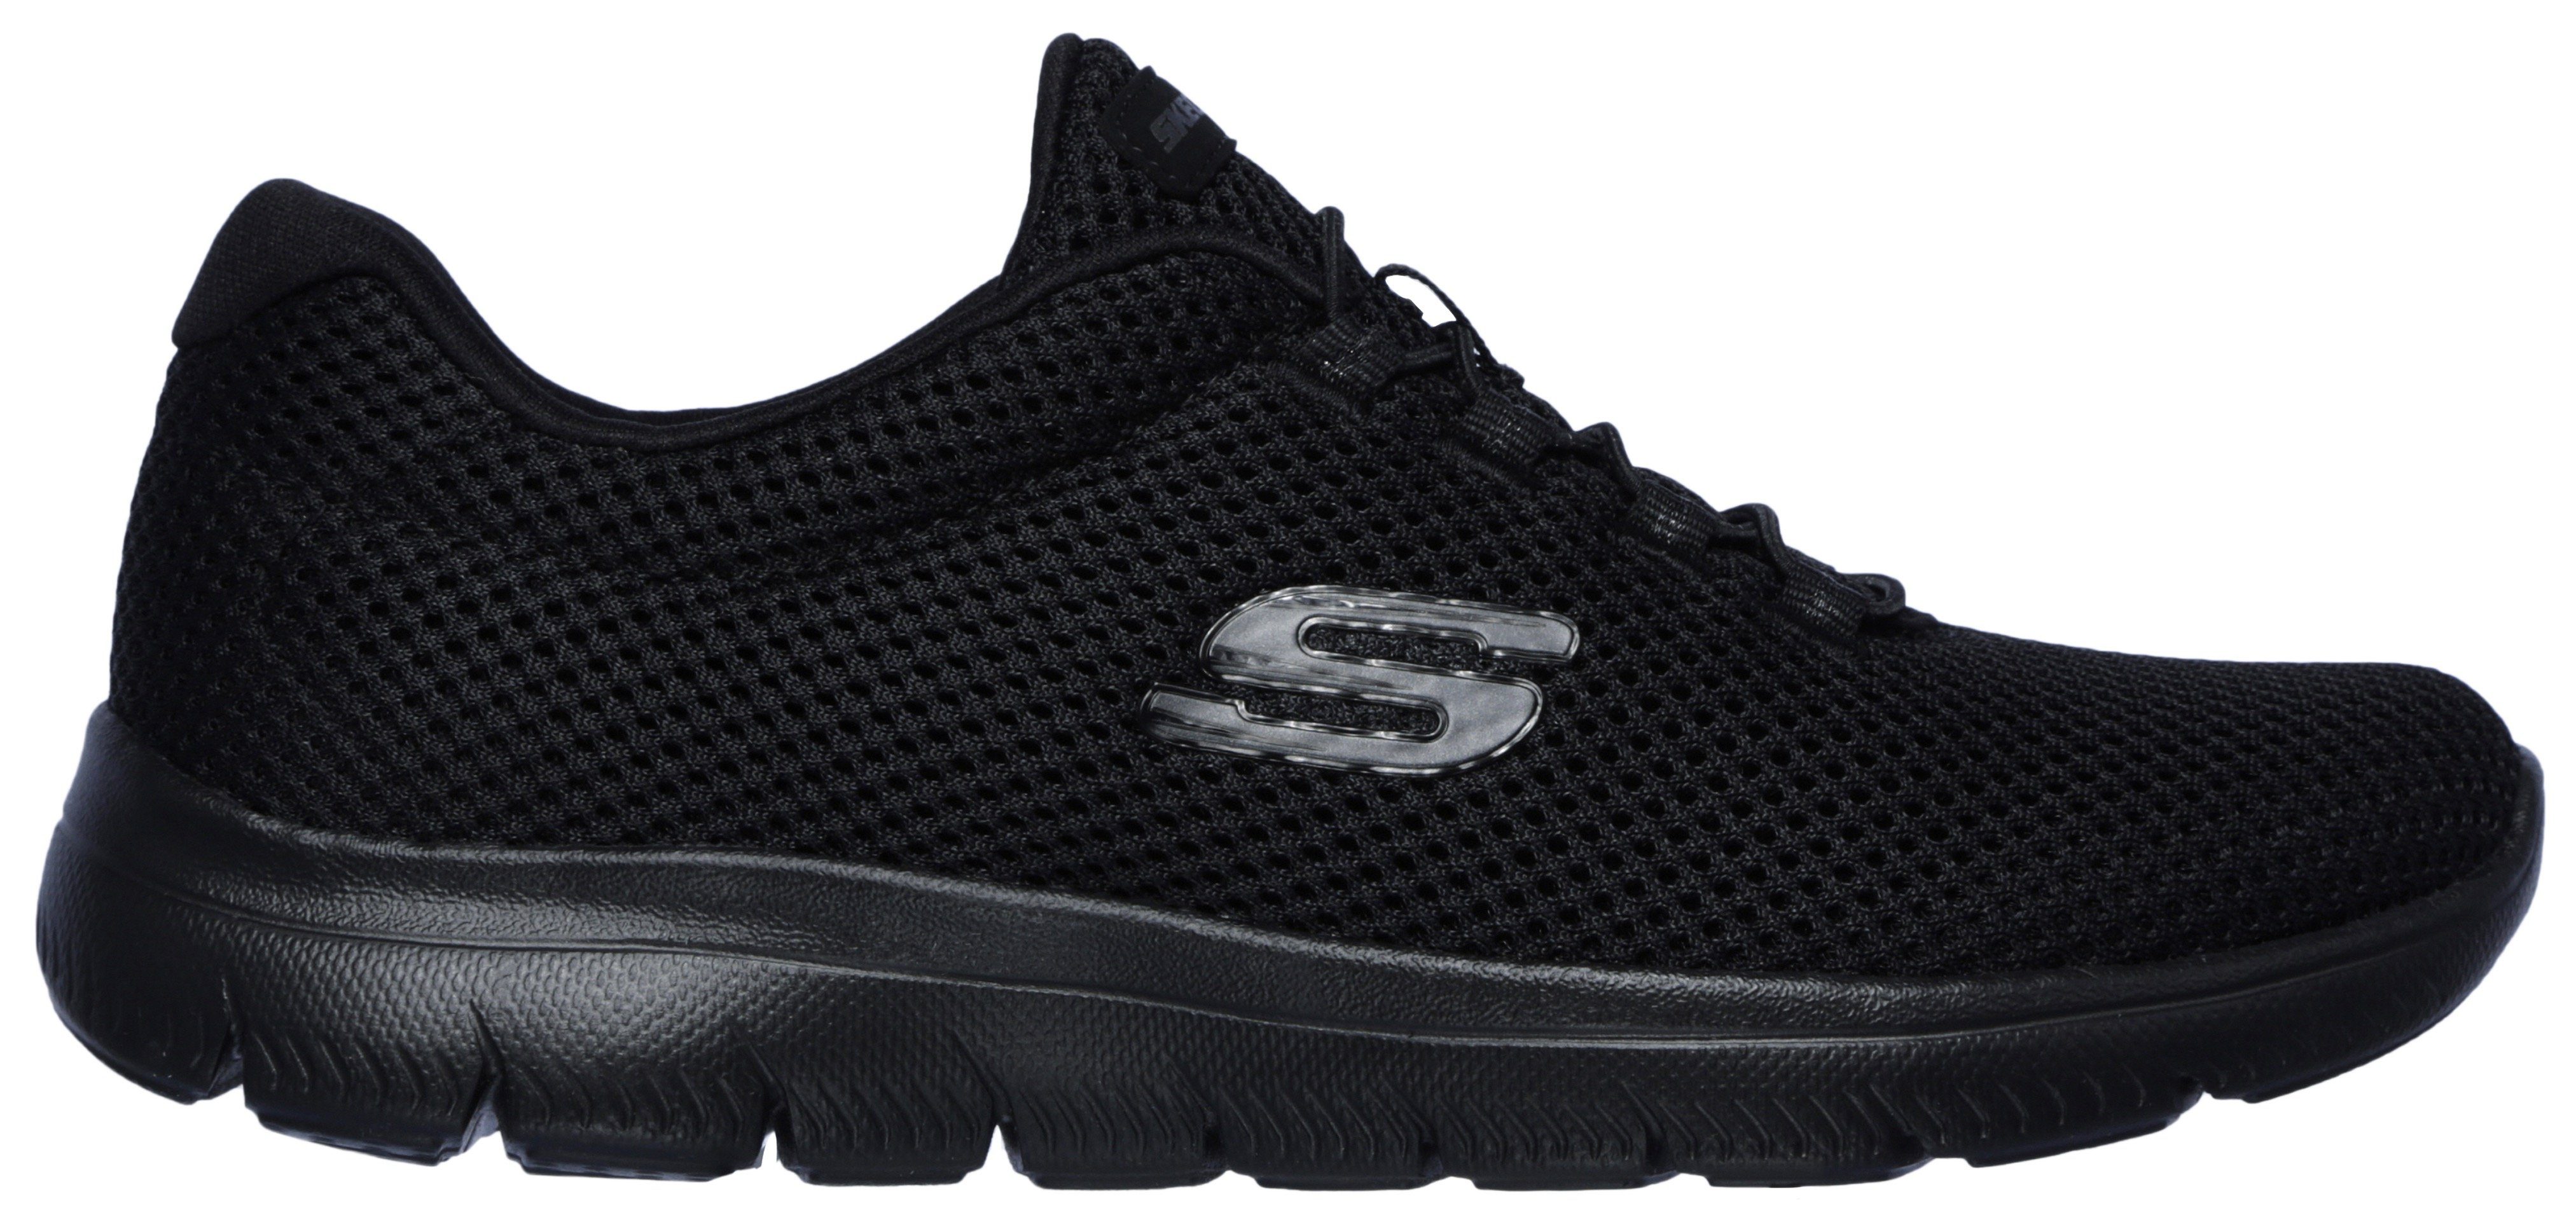 SUMMITS komfortabler Skechers Slip-On Innensohle mit Sneaker schwarz